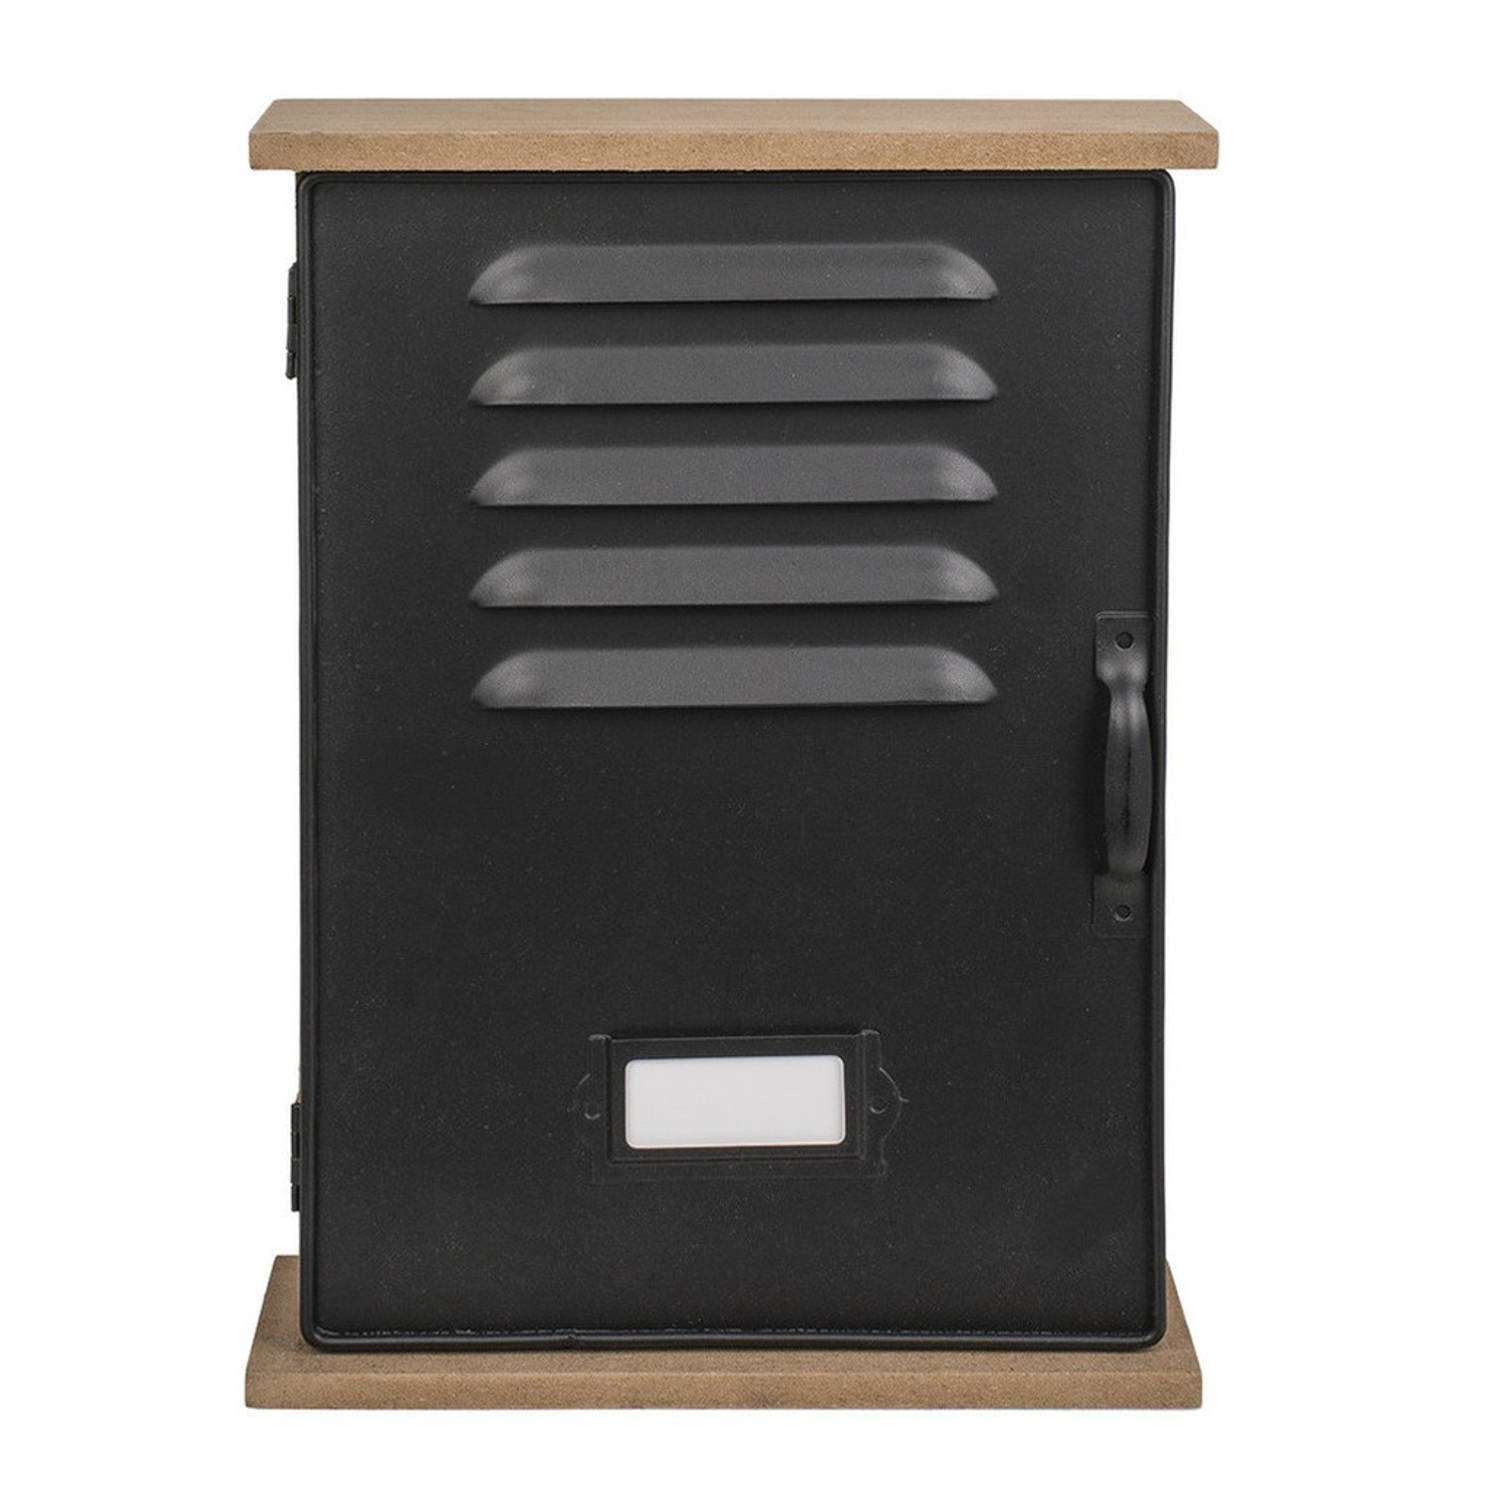 Locker sleutelkastje zwart van hout-metaal 20 x 27.5 cm Sleutelkastjes